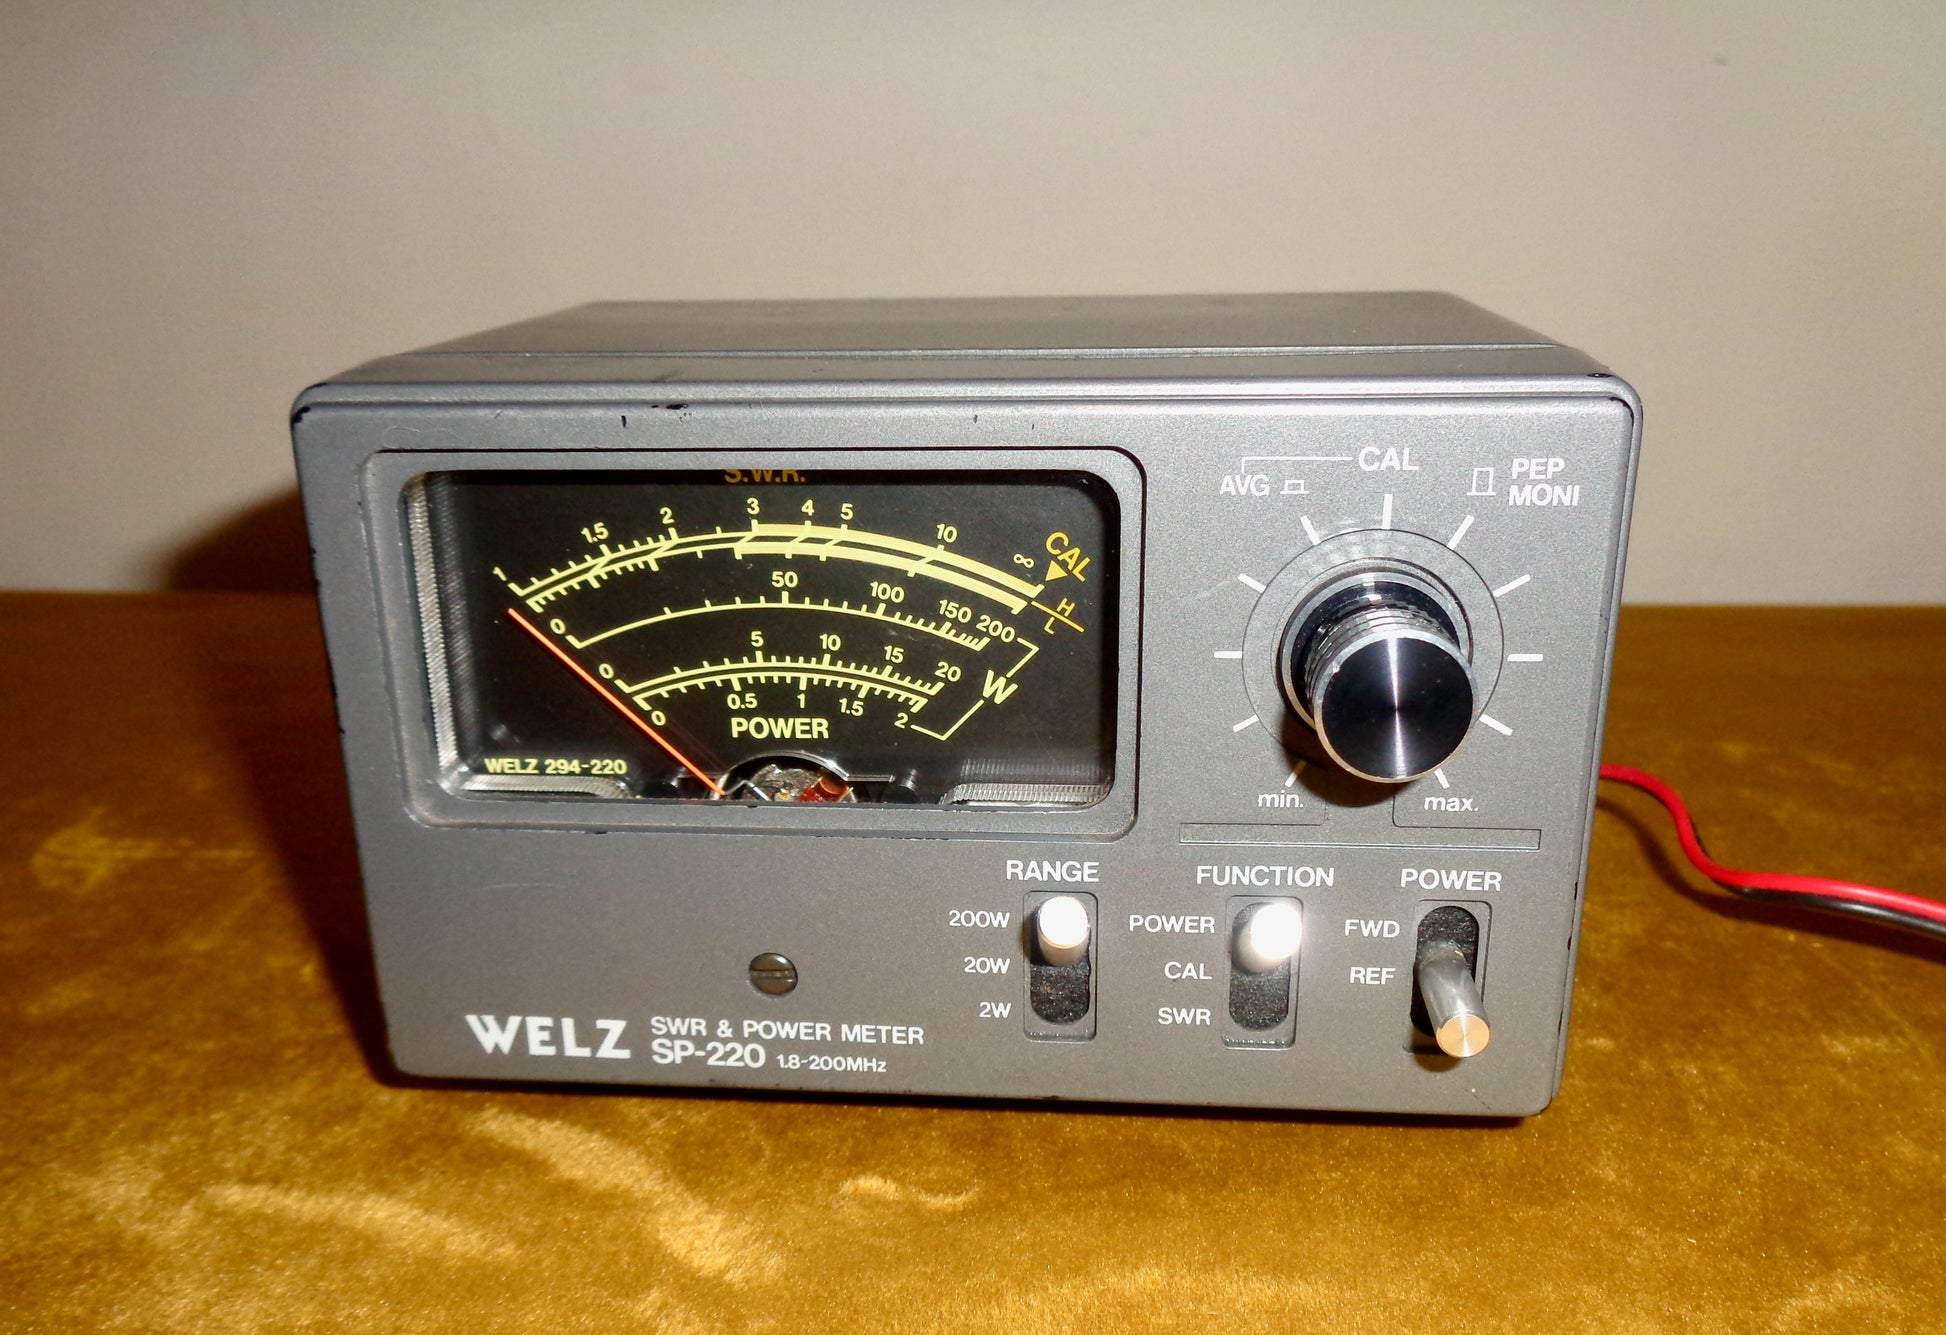 Welz SP 220 SWR and Power Meter 1.8-200MHz